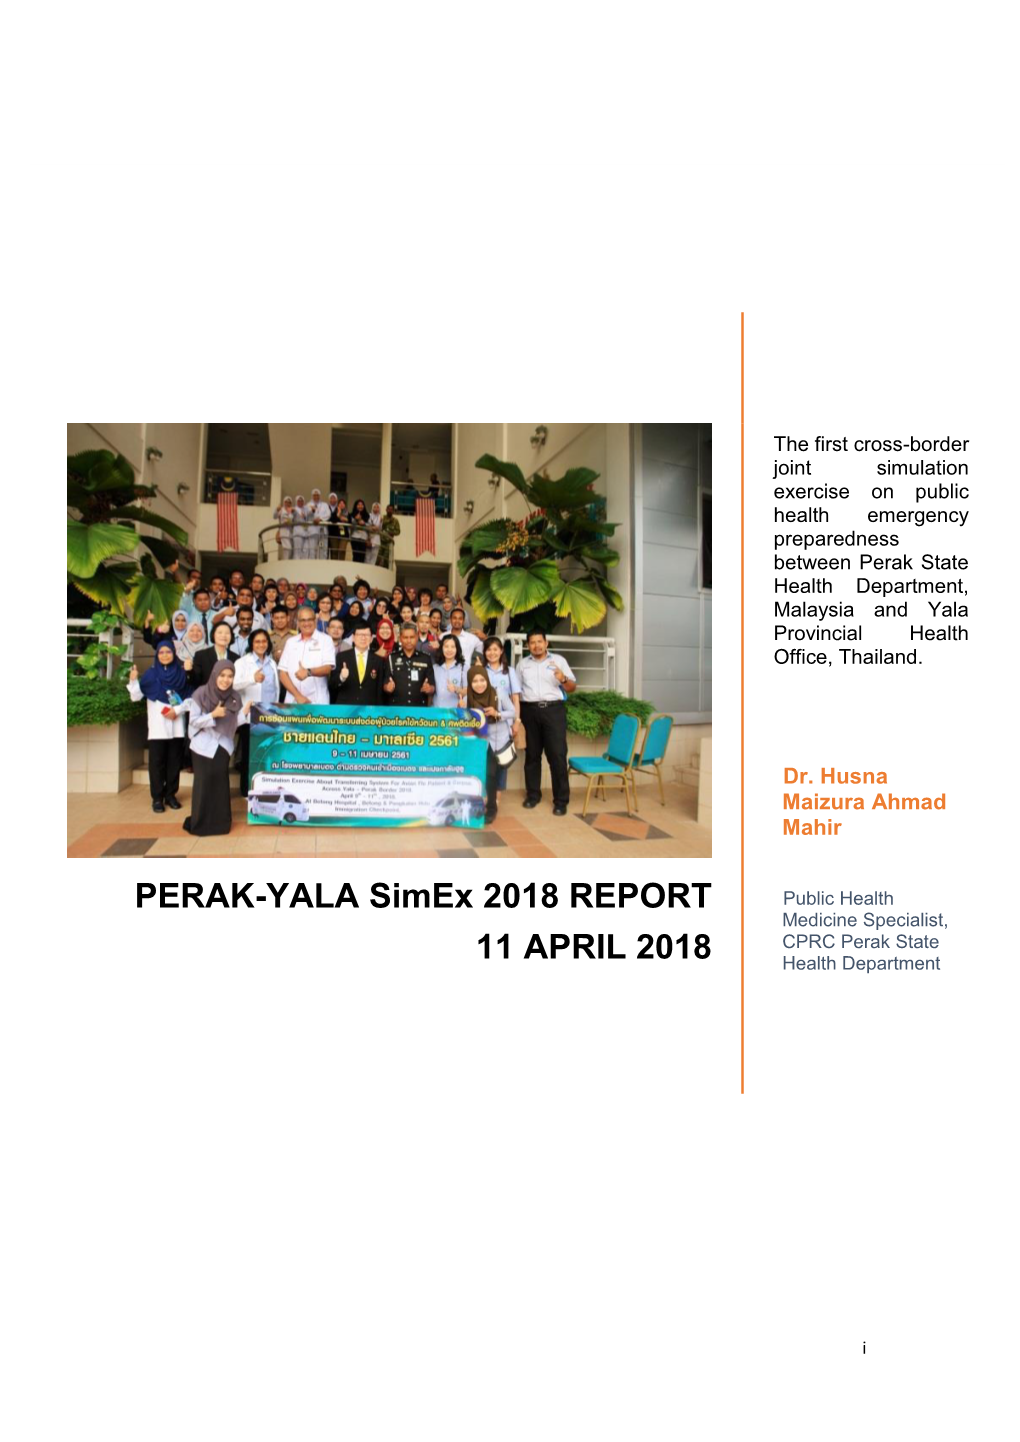 PERAK-YALA Simex 2018 REPORT Public Health Medicine Specialist, CPRC Perak State 11 APRIL 2018 Health Department